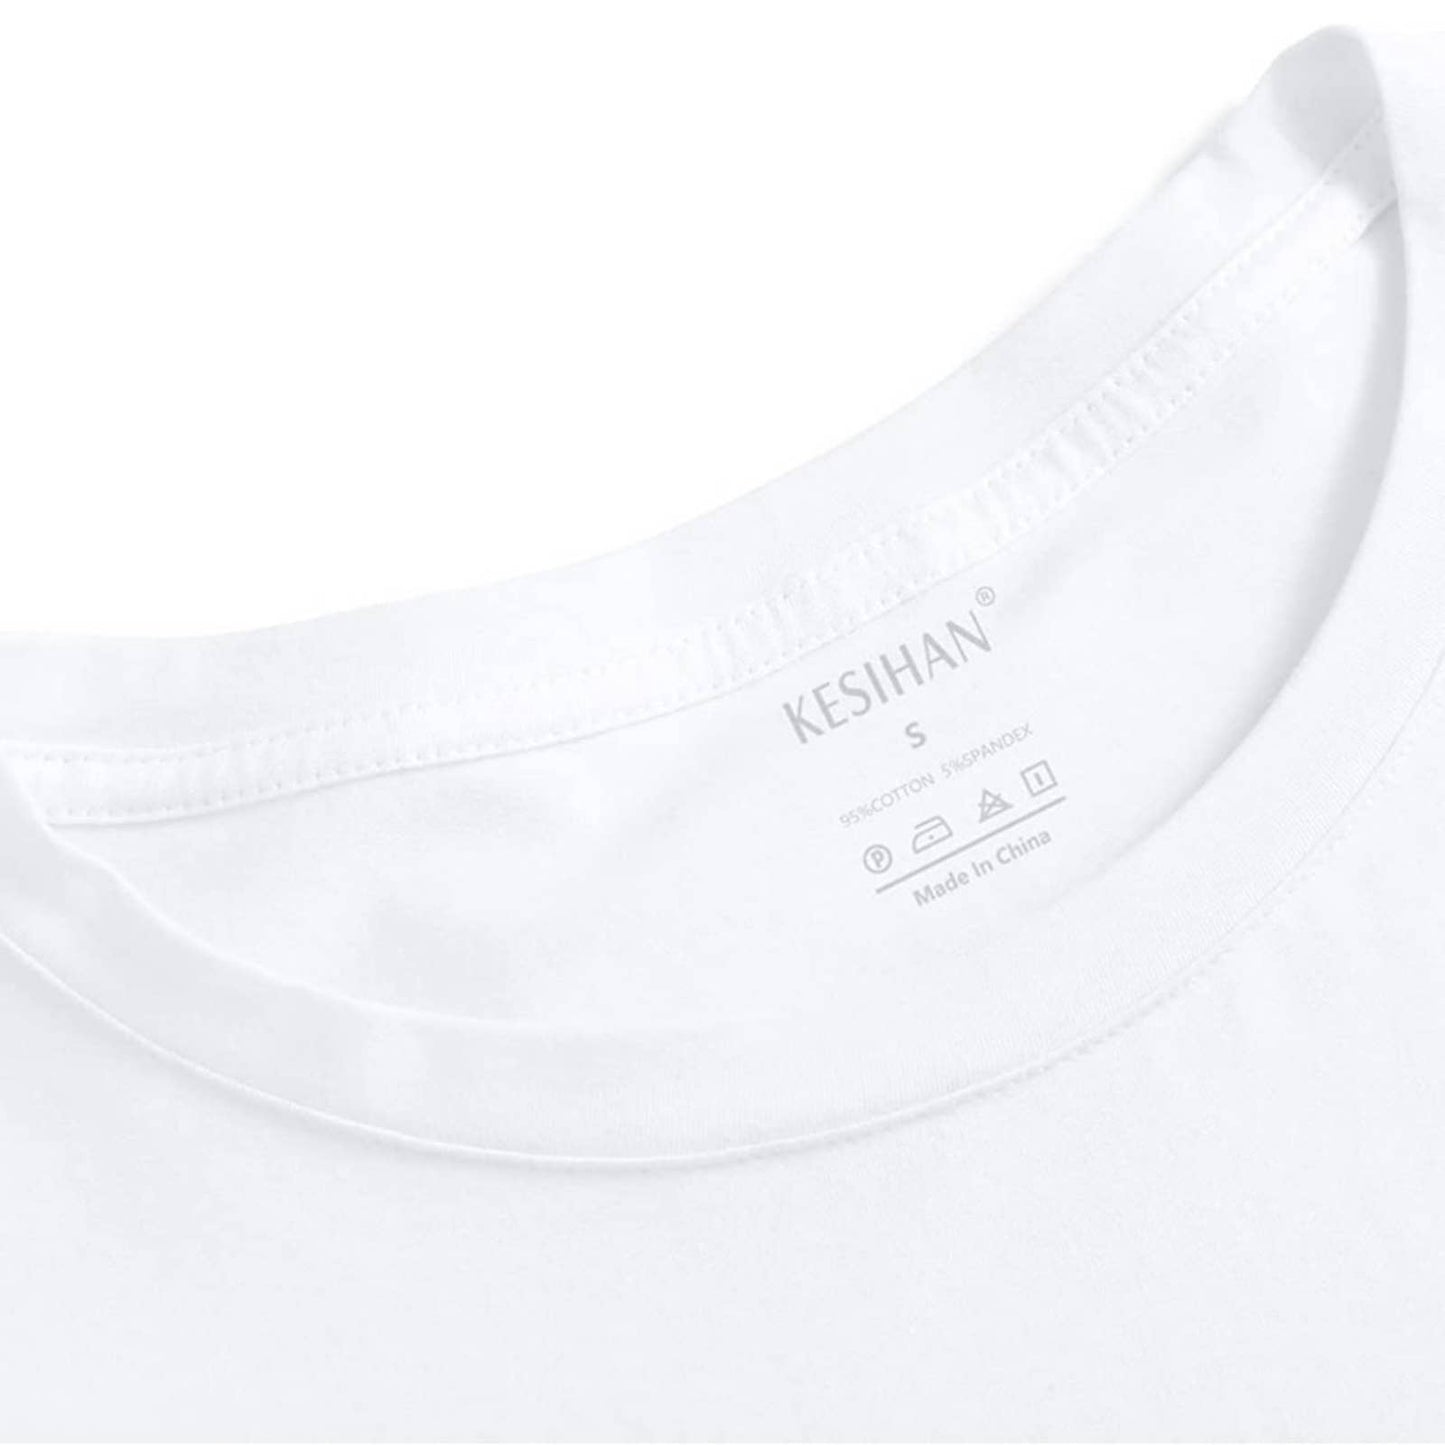 KESIHAN Men's Casual Cotton Spandex Striped Crewneck T-Shirt 2XL